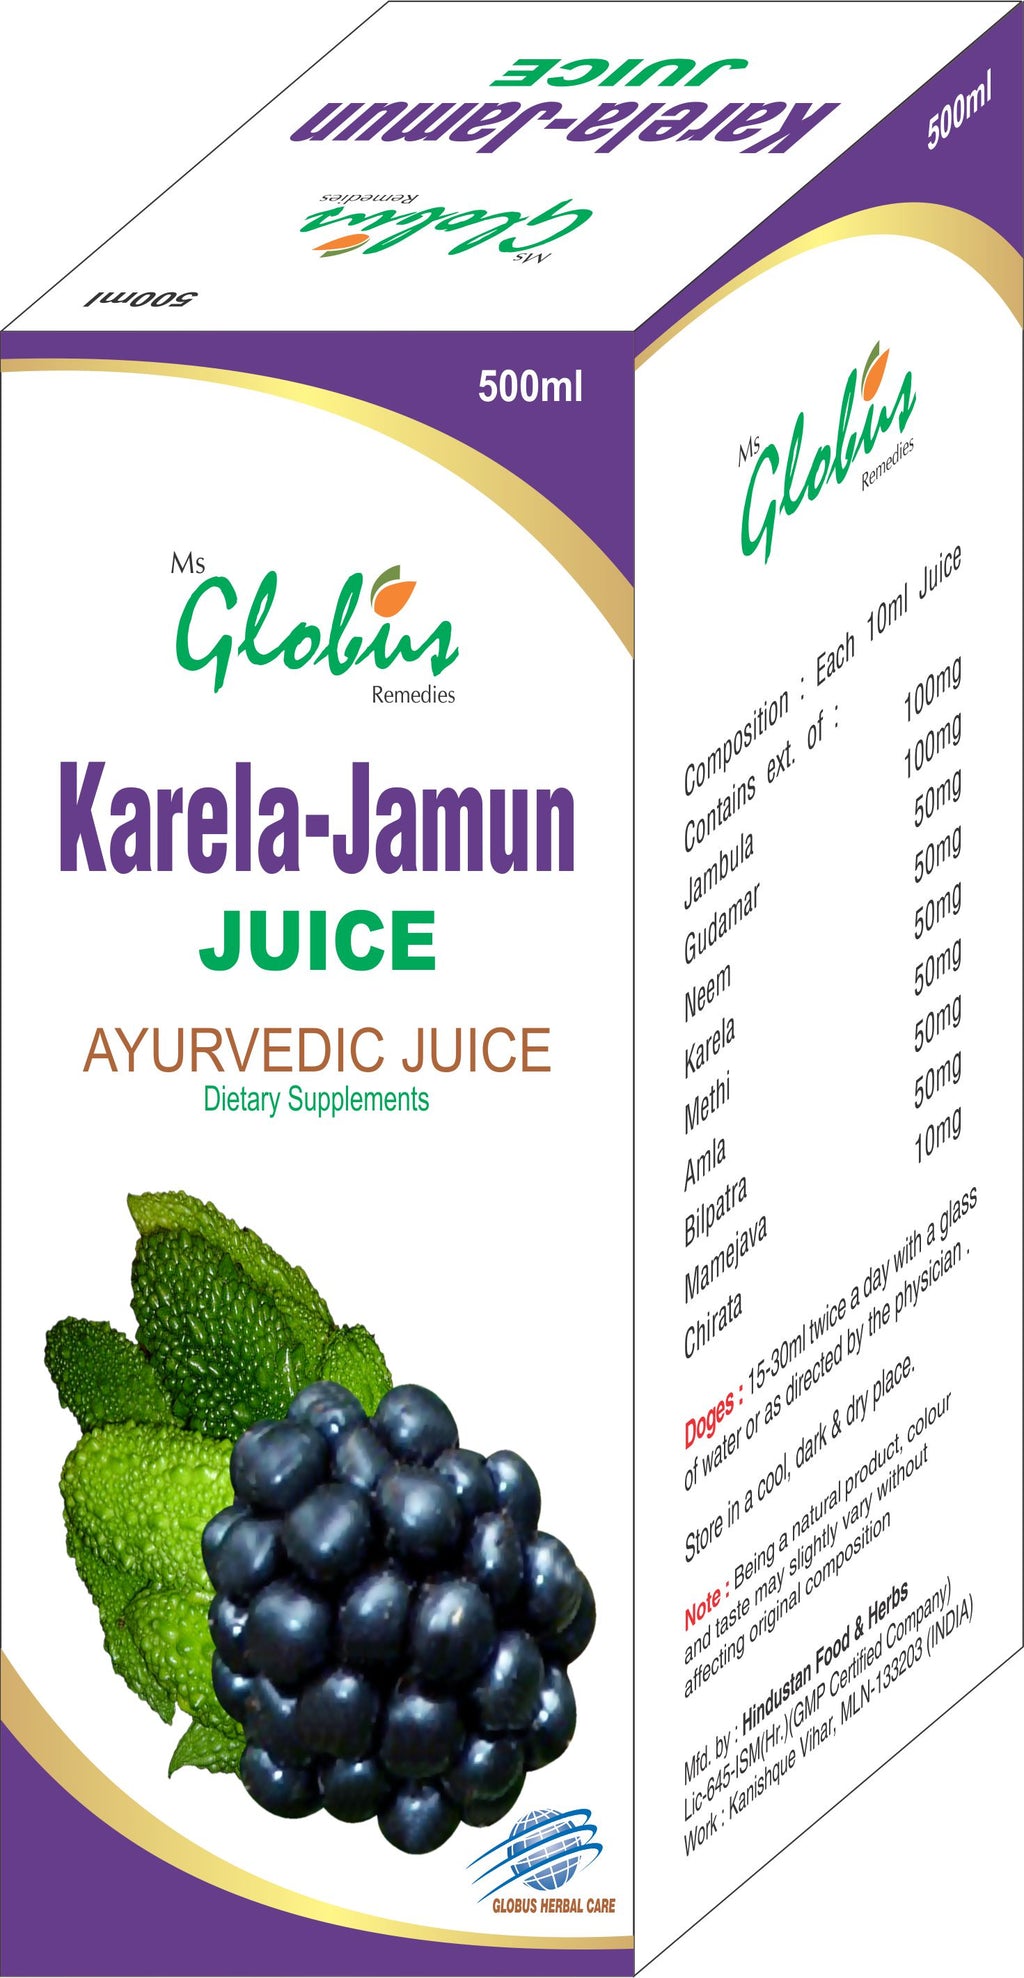 Karela Jamun Juice - Helps Maintain Healthy Sugar Levels